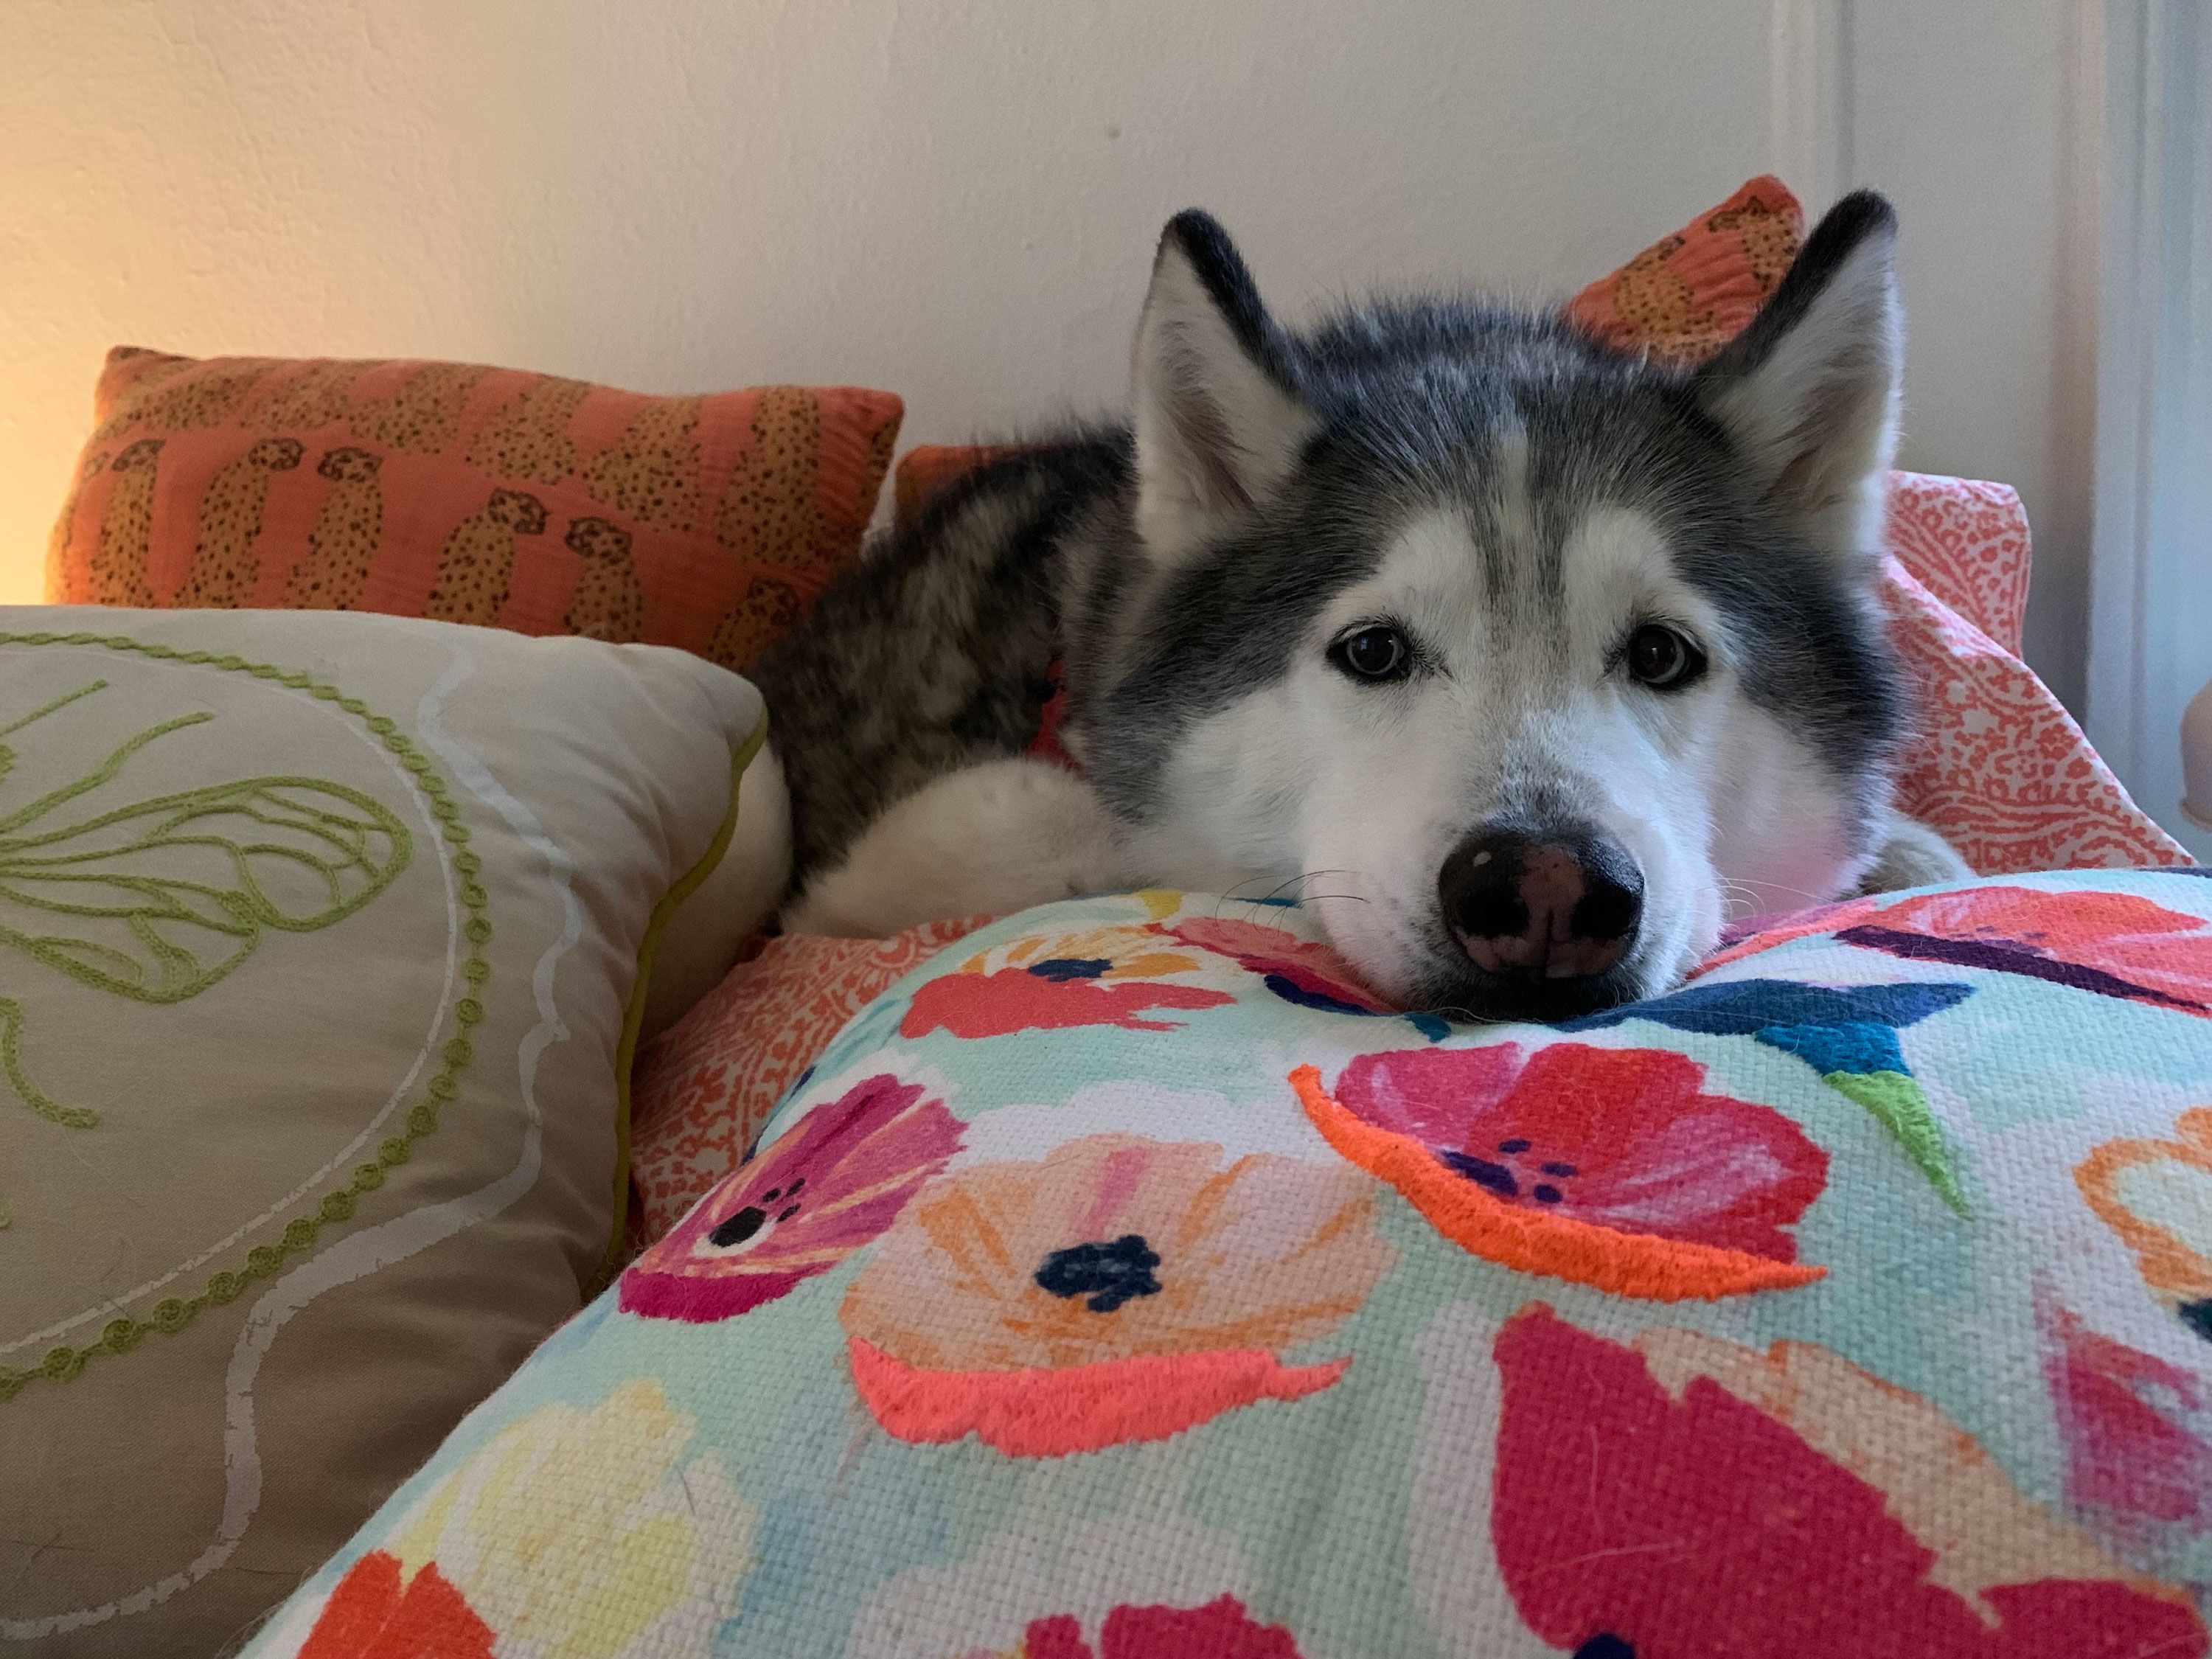 Why Do Dogs Sleep Under Blankets?